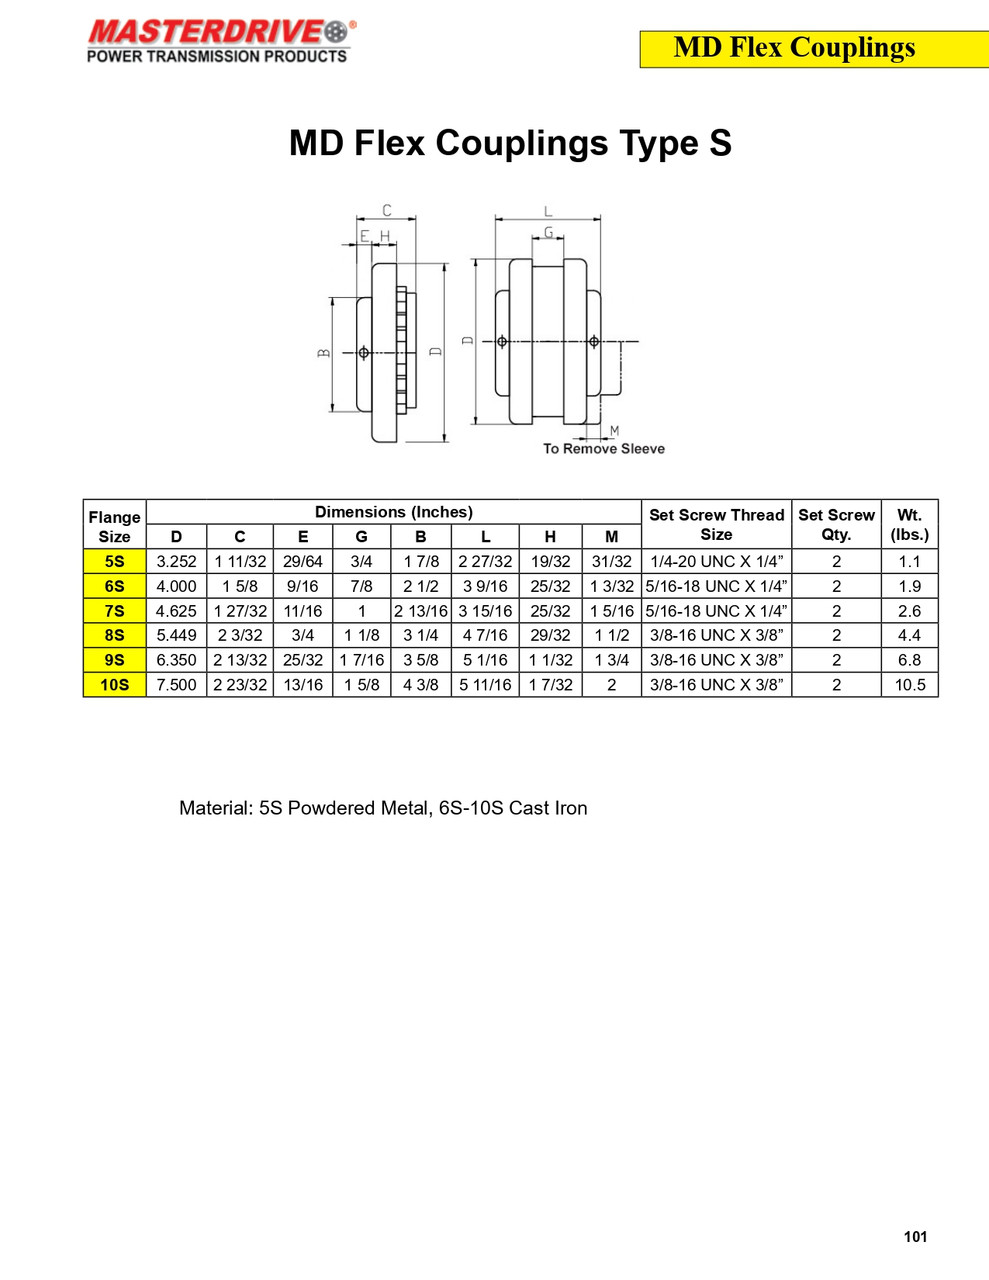 #8 x 48mm Shaft Sure-Flex® Coupling Half   8S-48MM